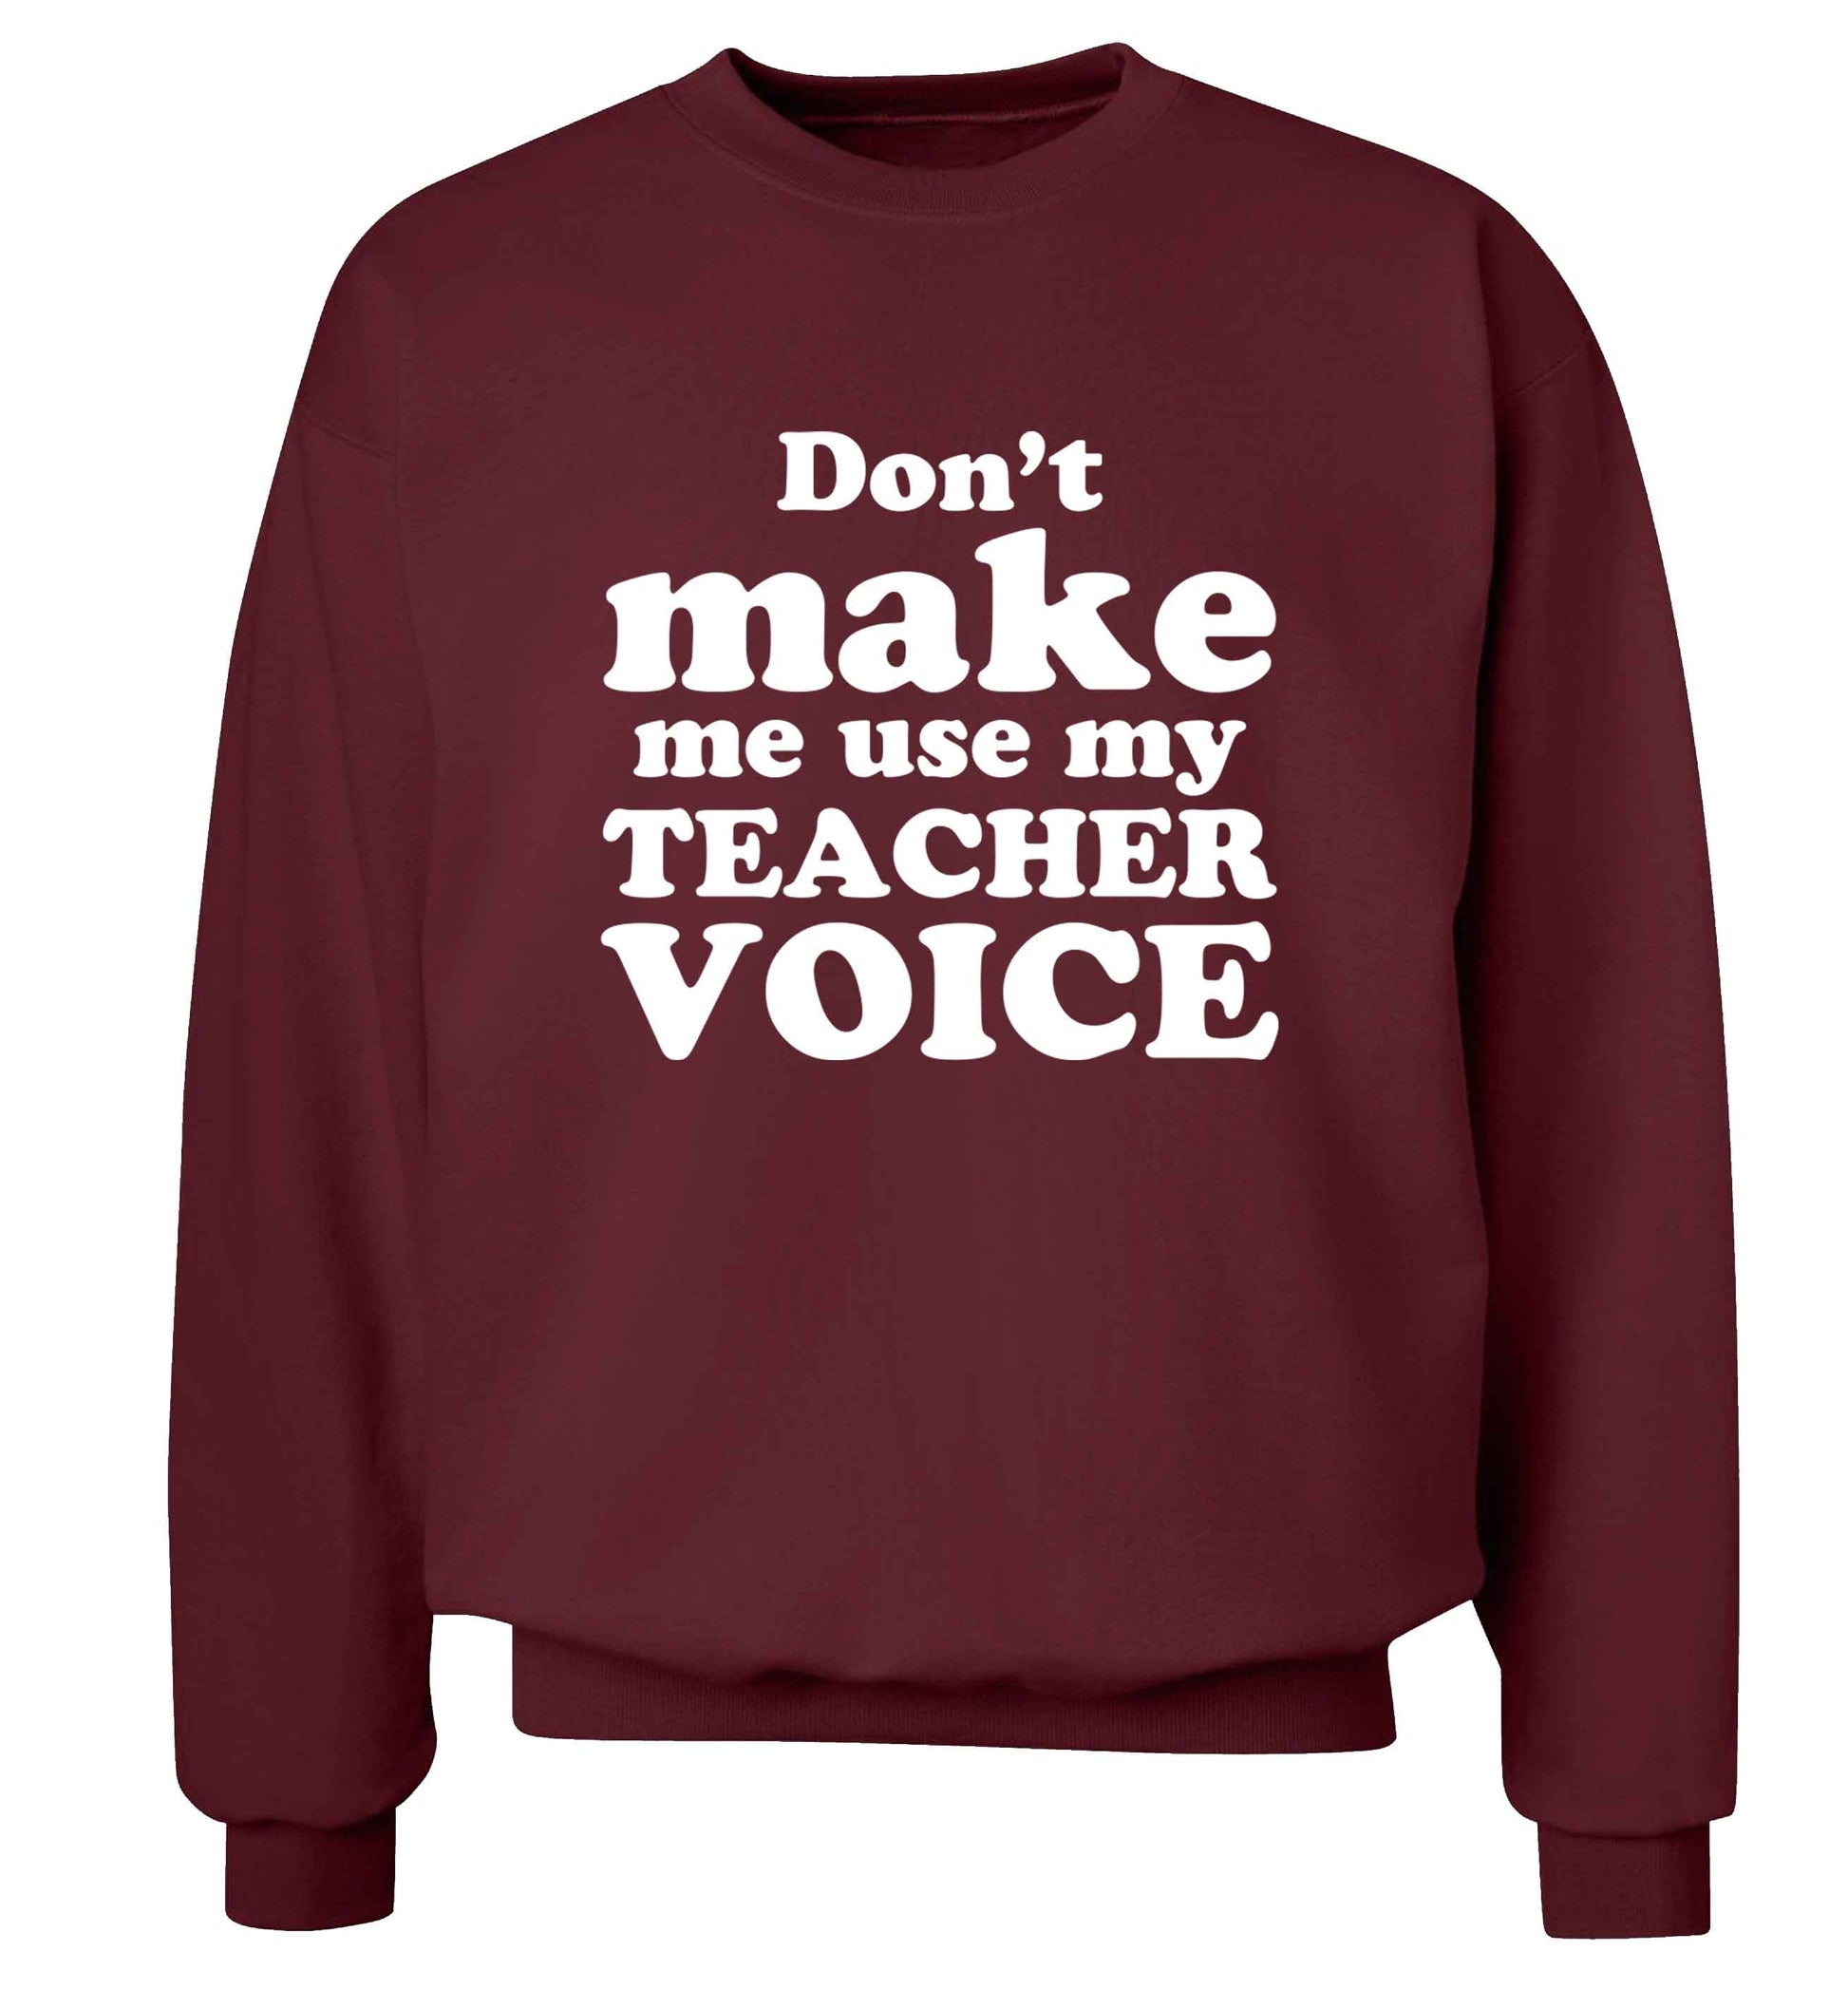 Don't make me use my teacher voice adult's unisex maroon sweater 2XL